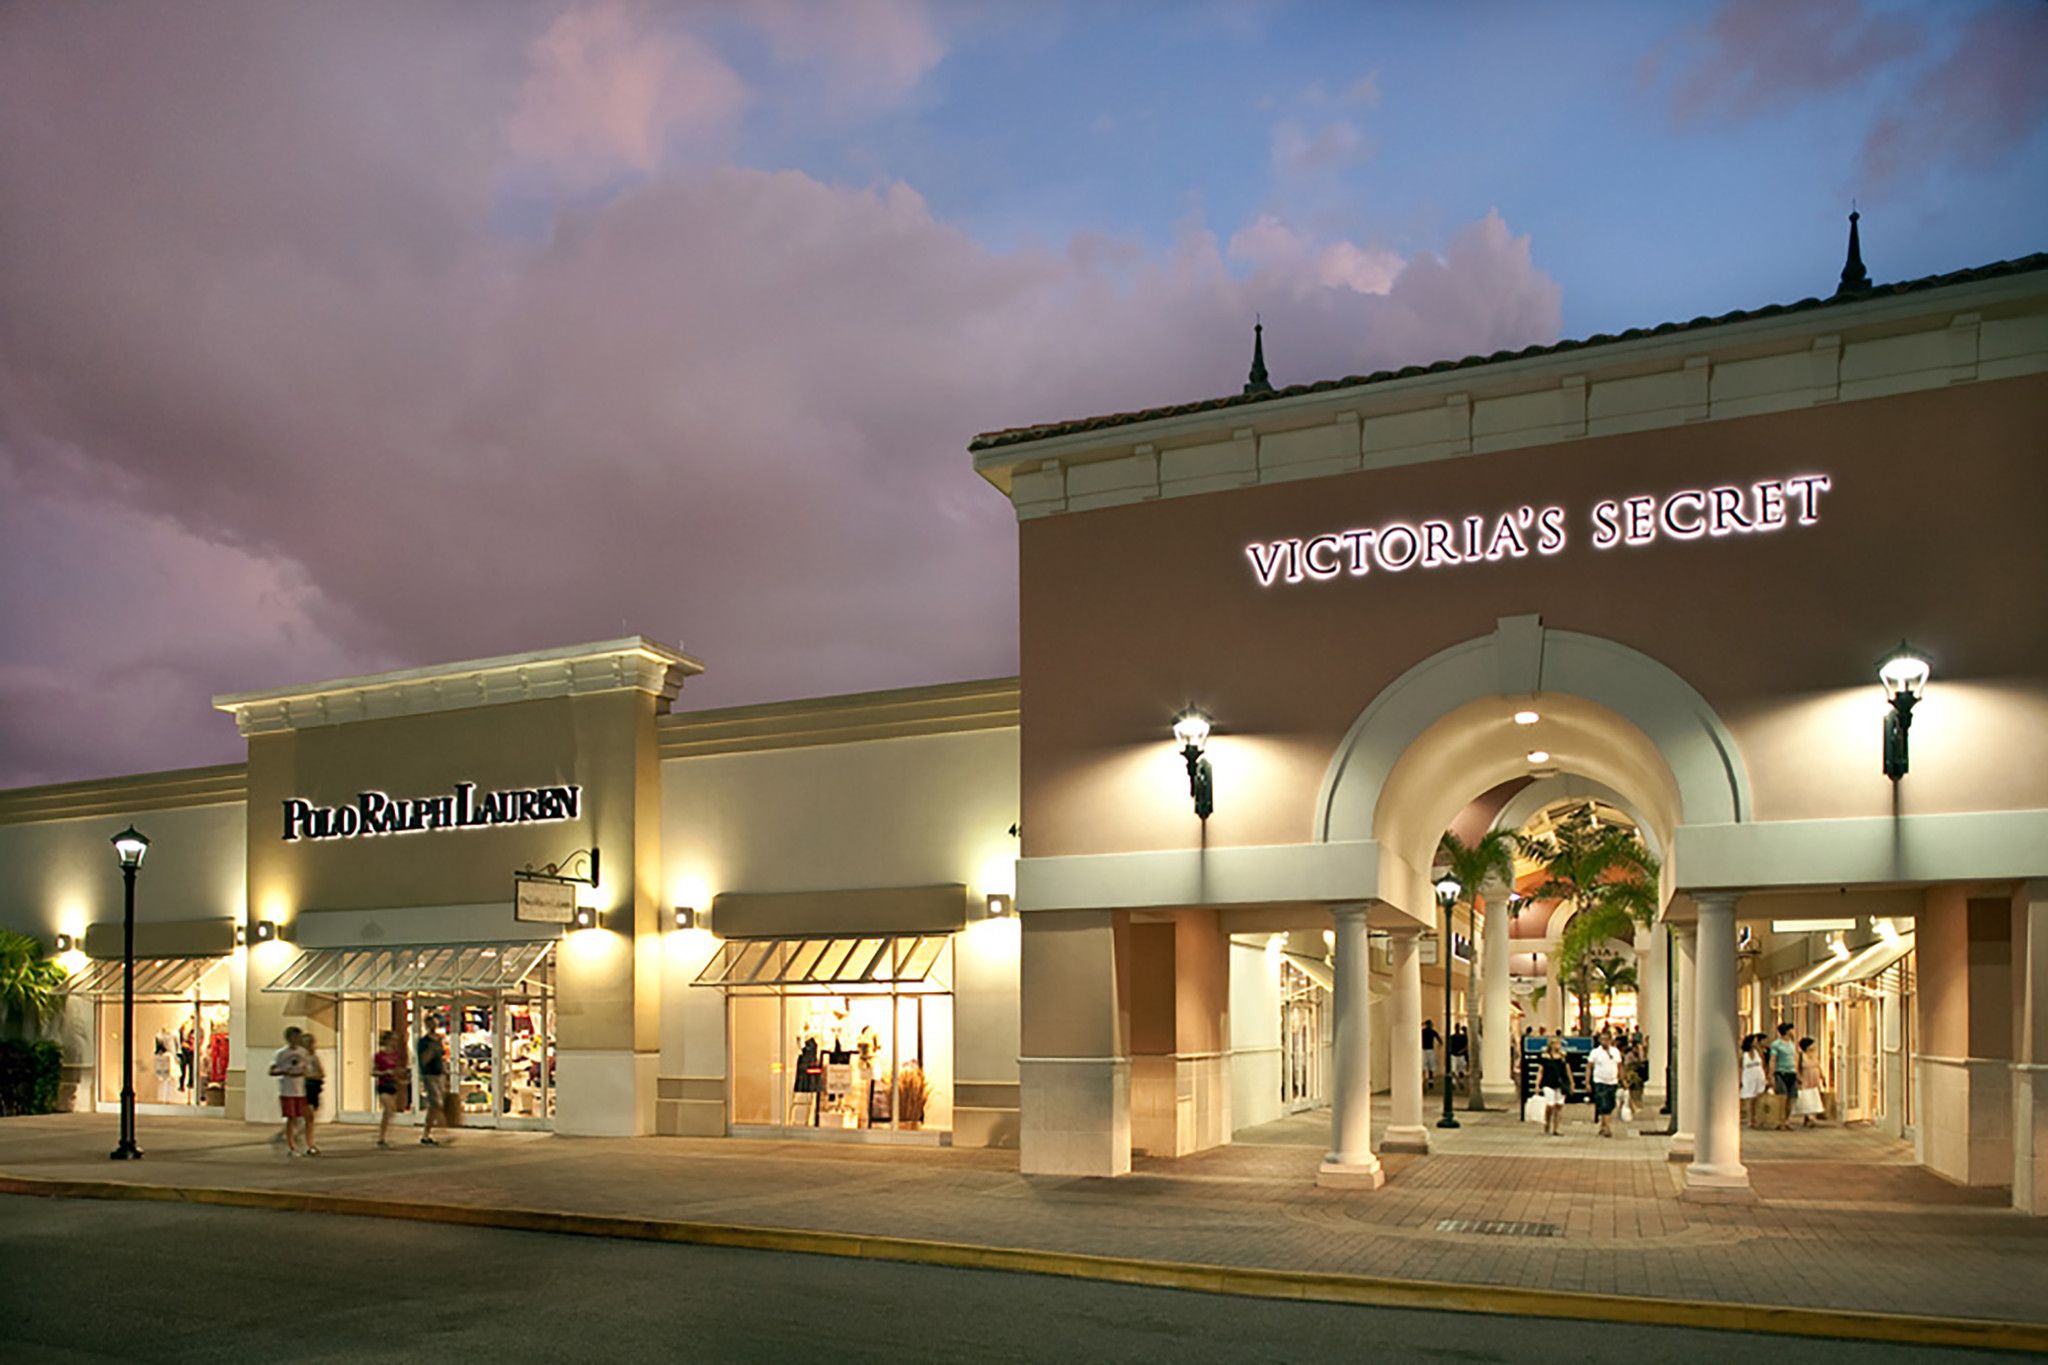 Orlando International Premium Outlets®, Orlando, FL